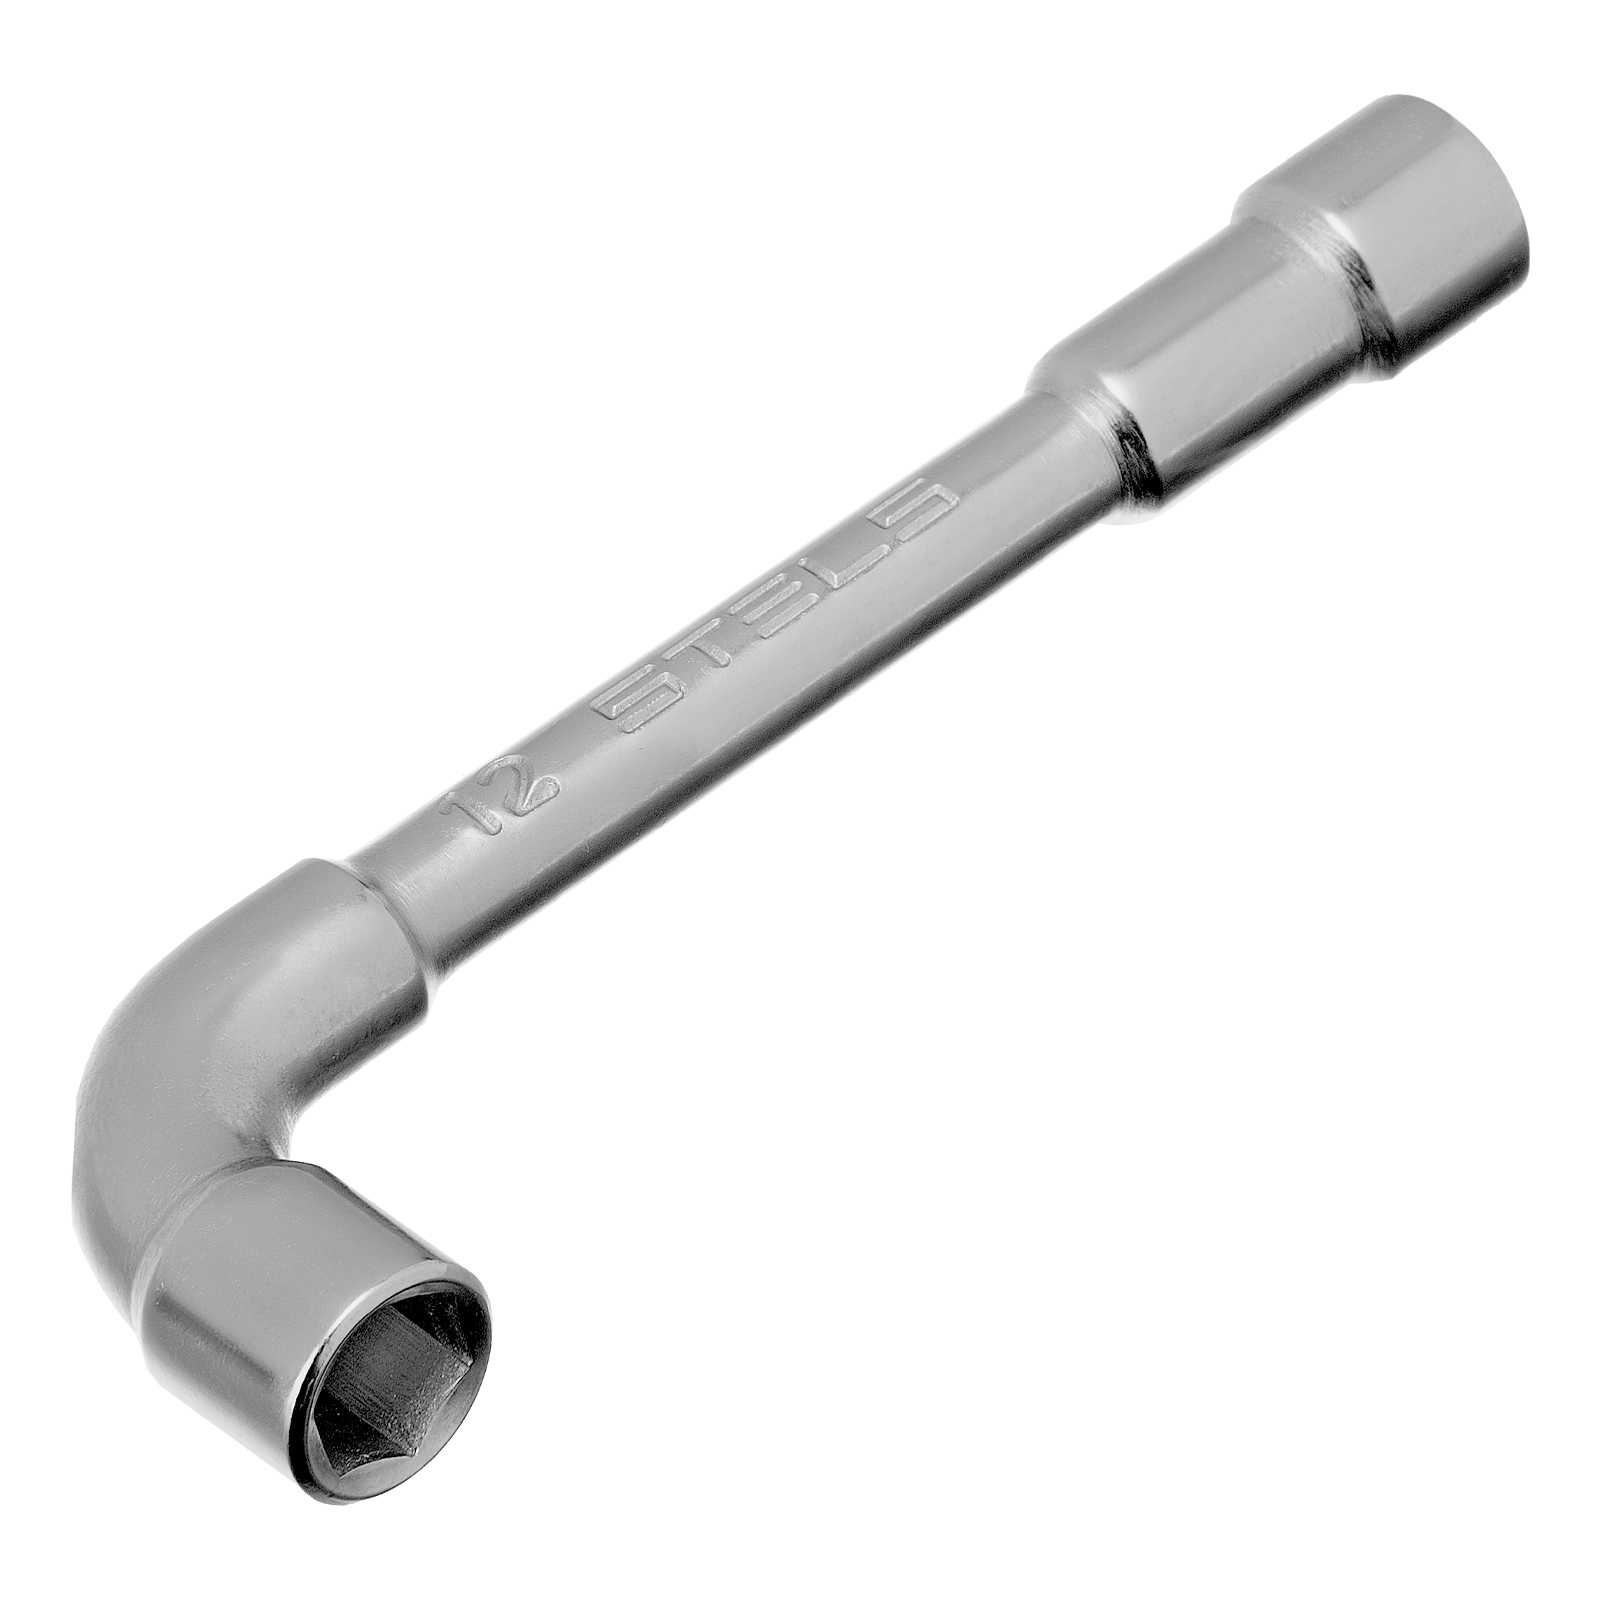 Торцевой трубчатый ключ STELS 14233